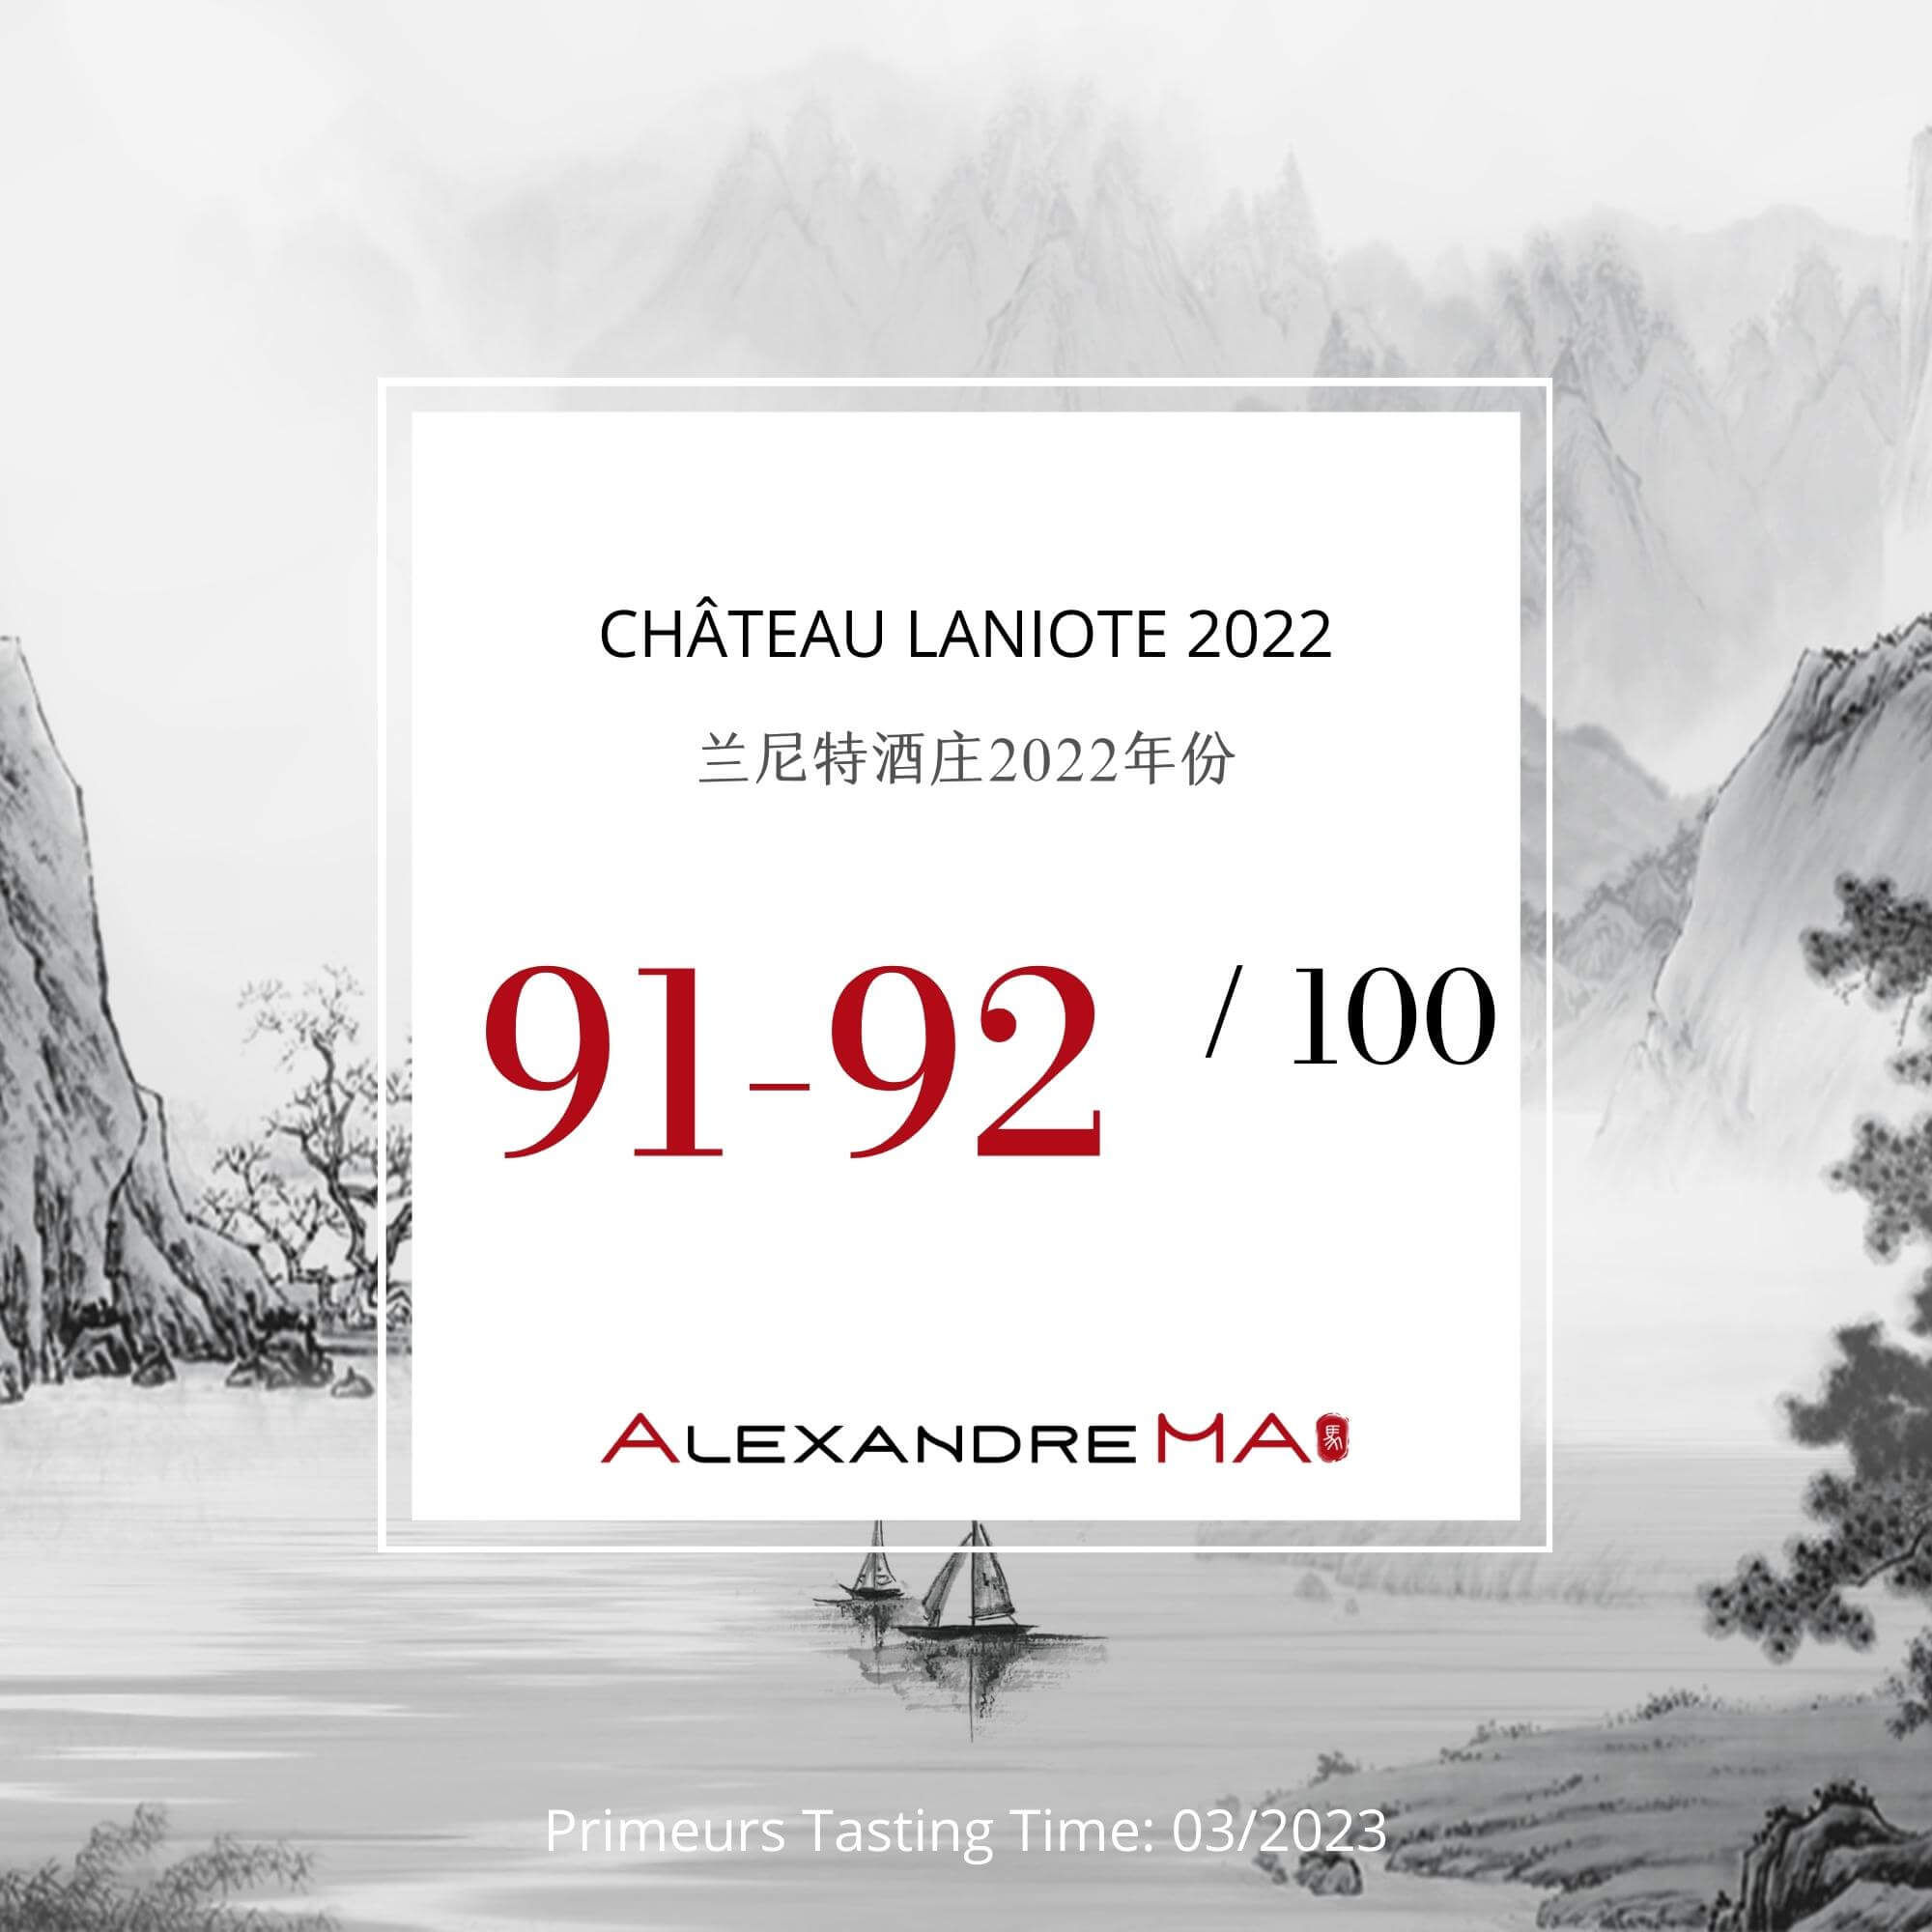 Château Laniote 2022 Primeurs - Alexandre MA